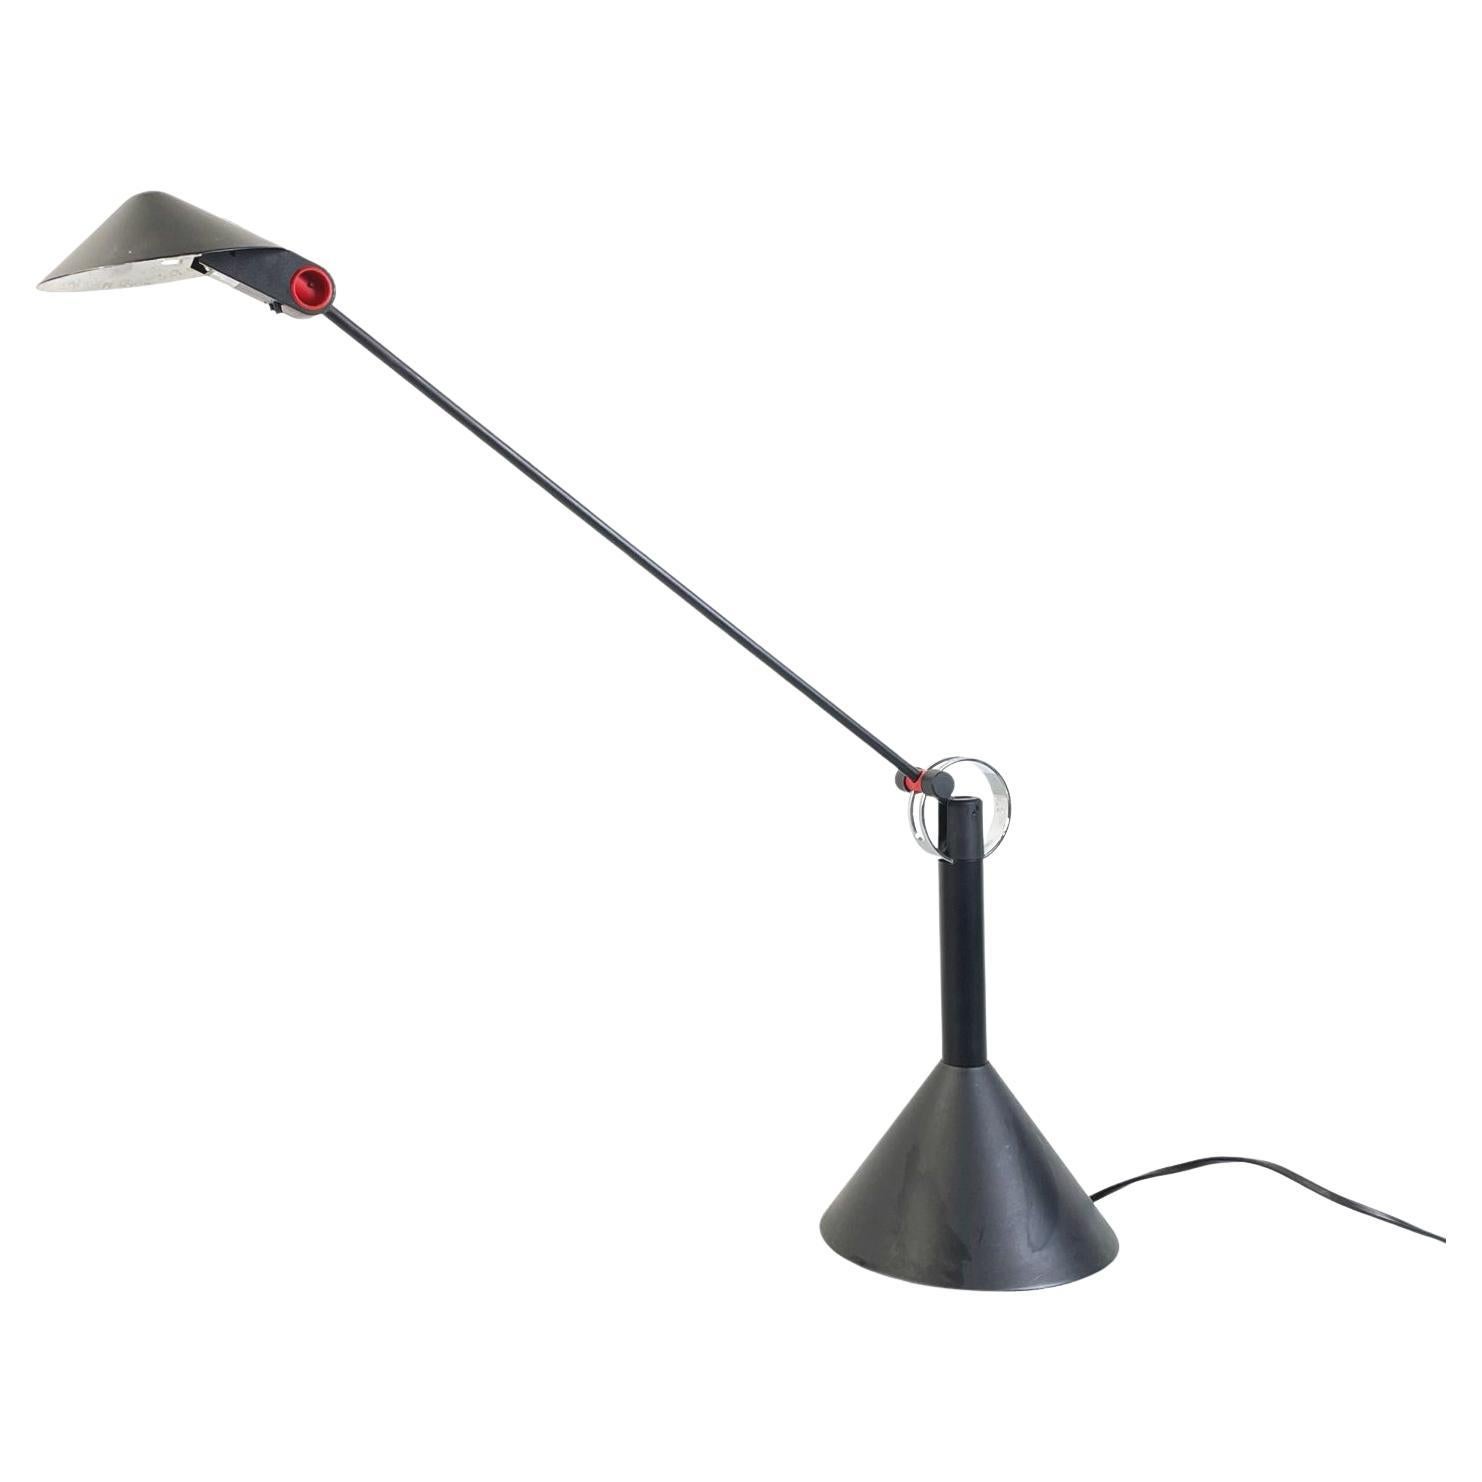 Italian Modern Adjustable Black and Silver Metal Table Lamp, 1980s